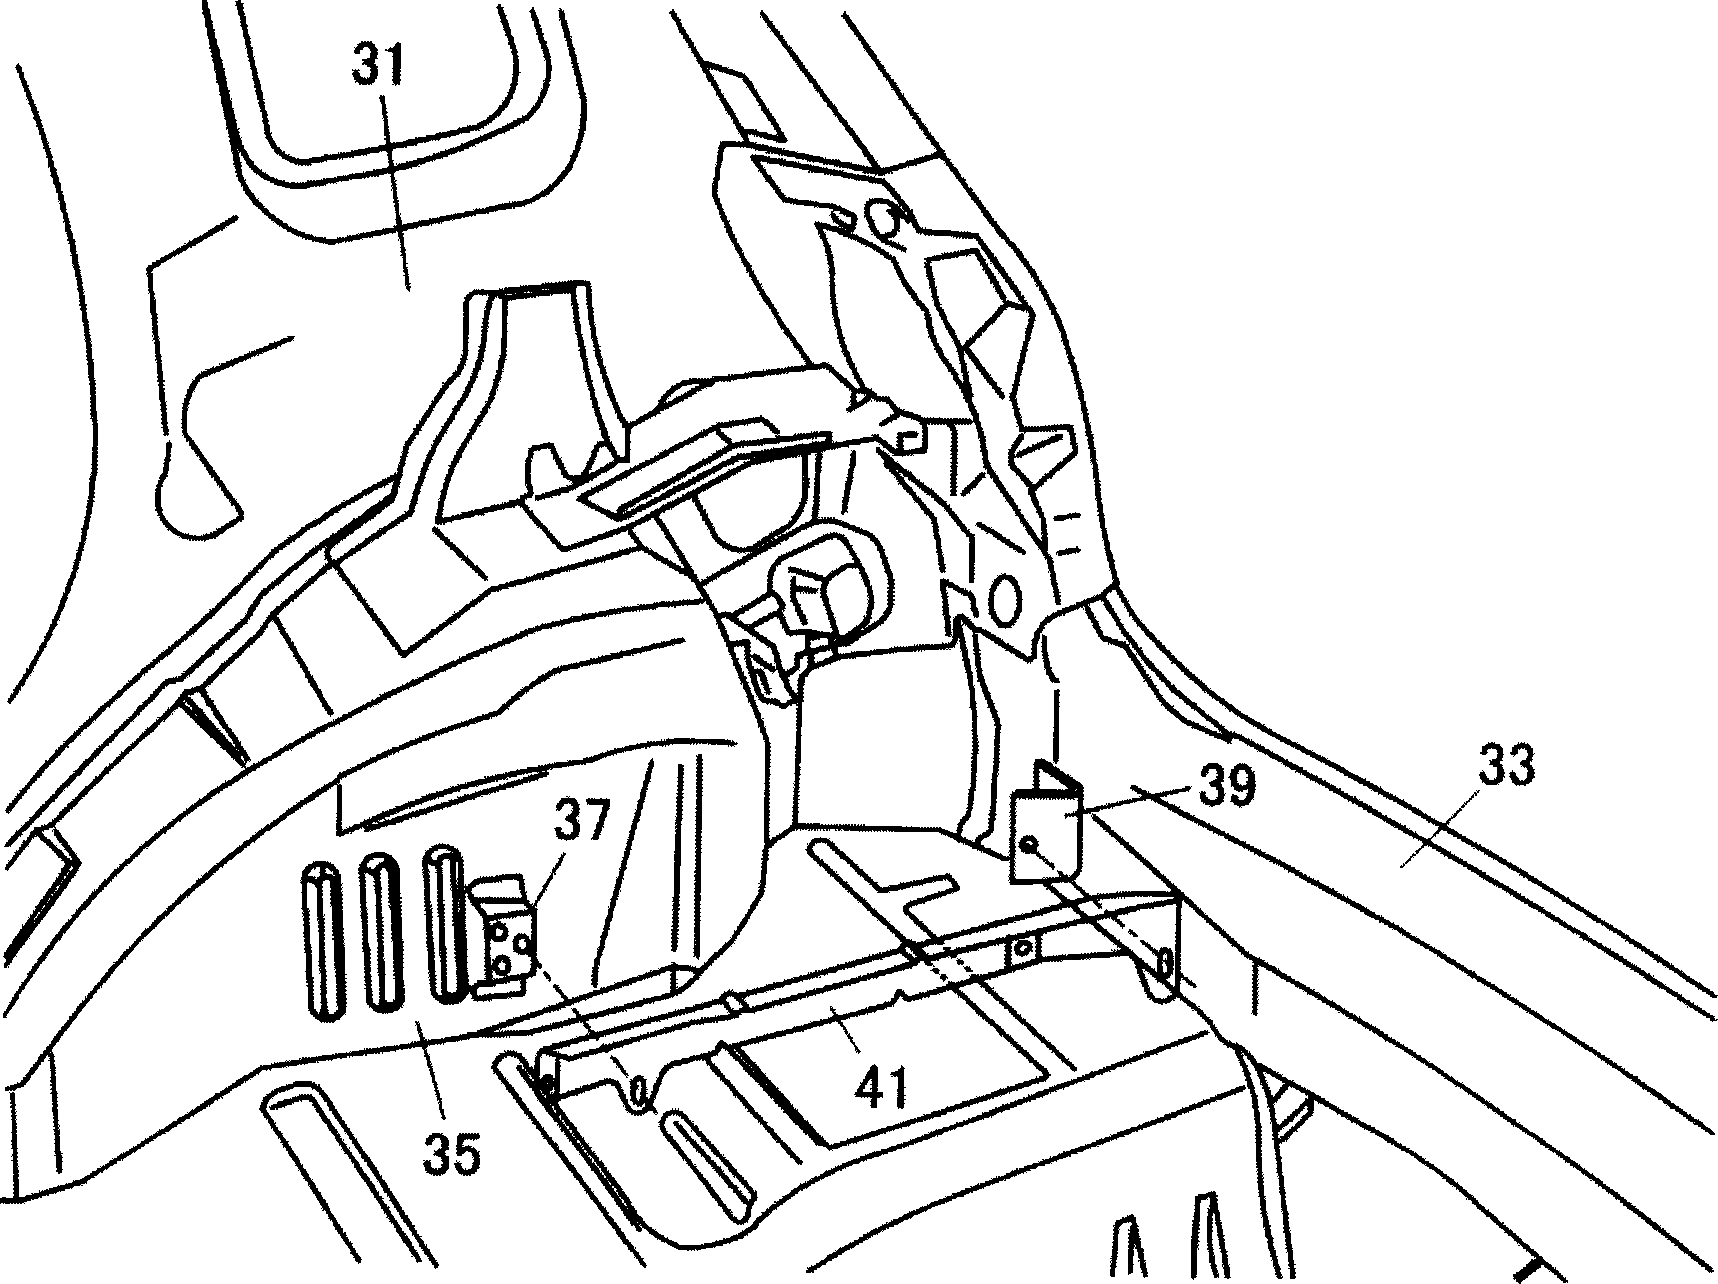 Automobile rear compartment structure